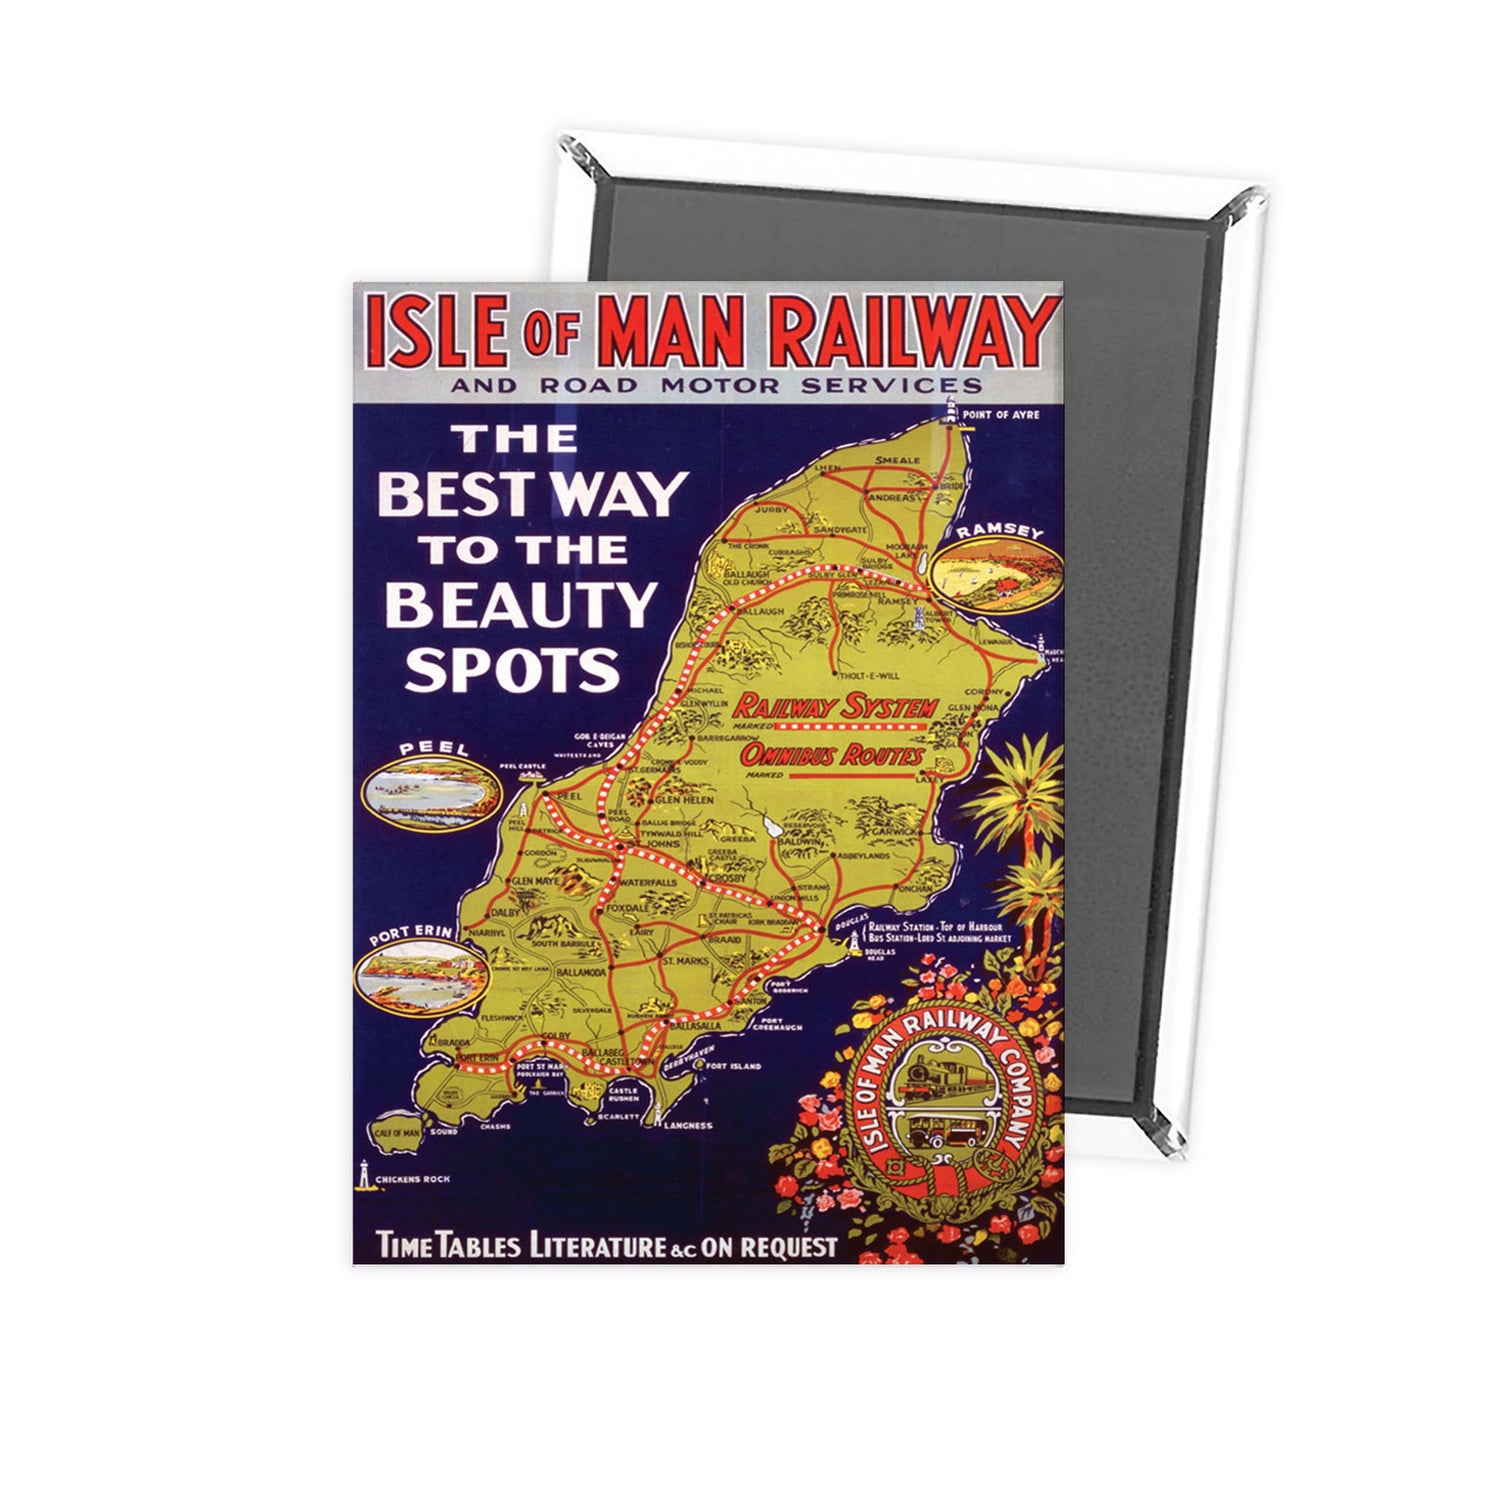 The Best way to the beauty spots - Isle of Man Railway Fridge Magnet